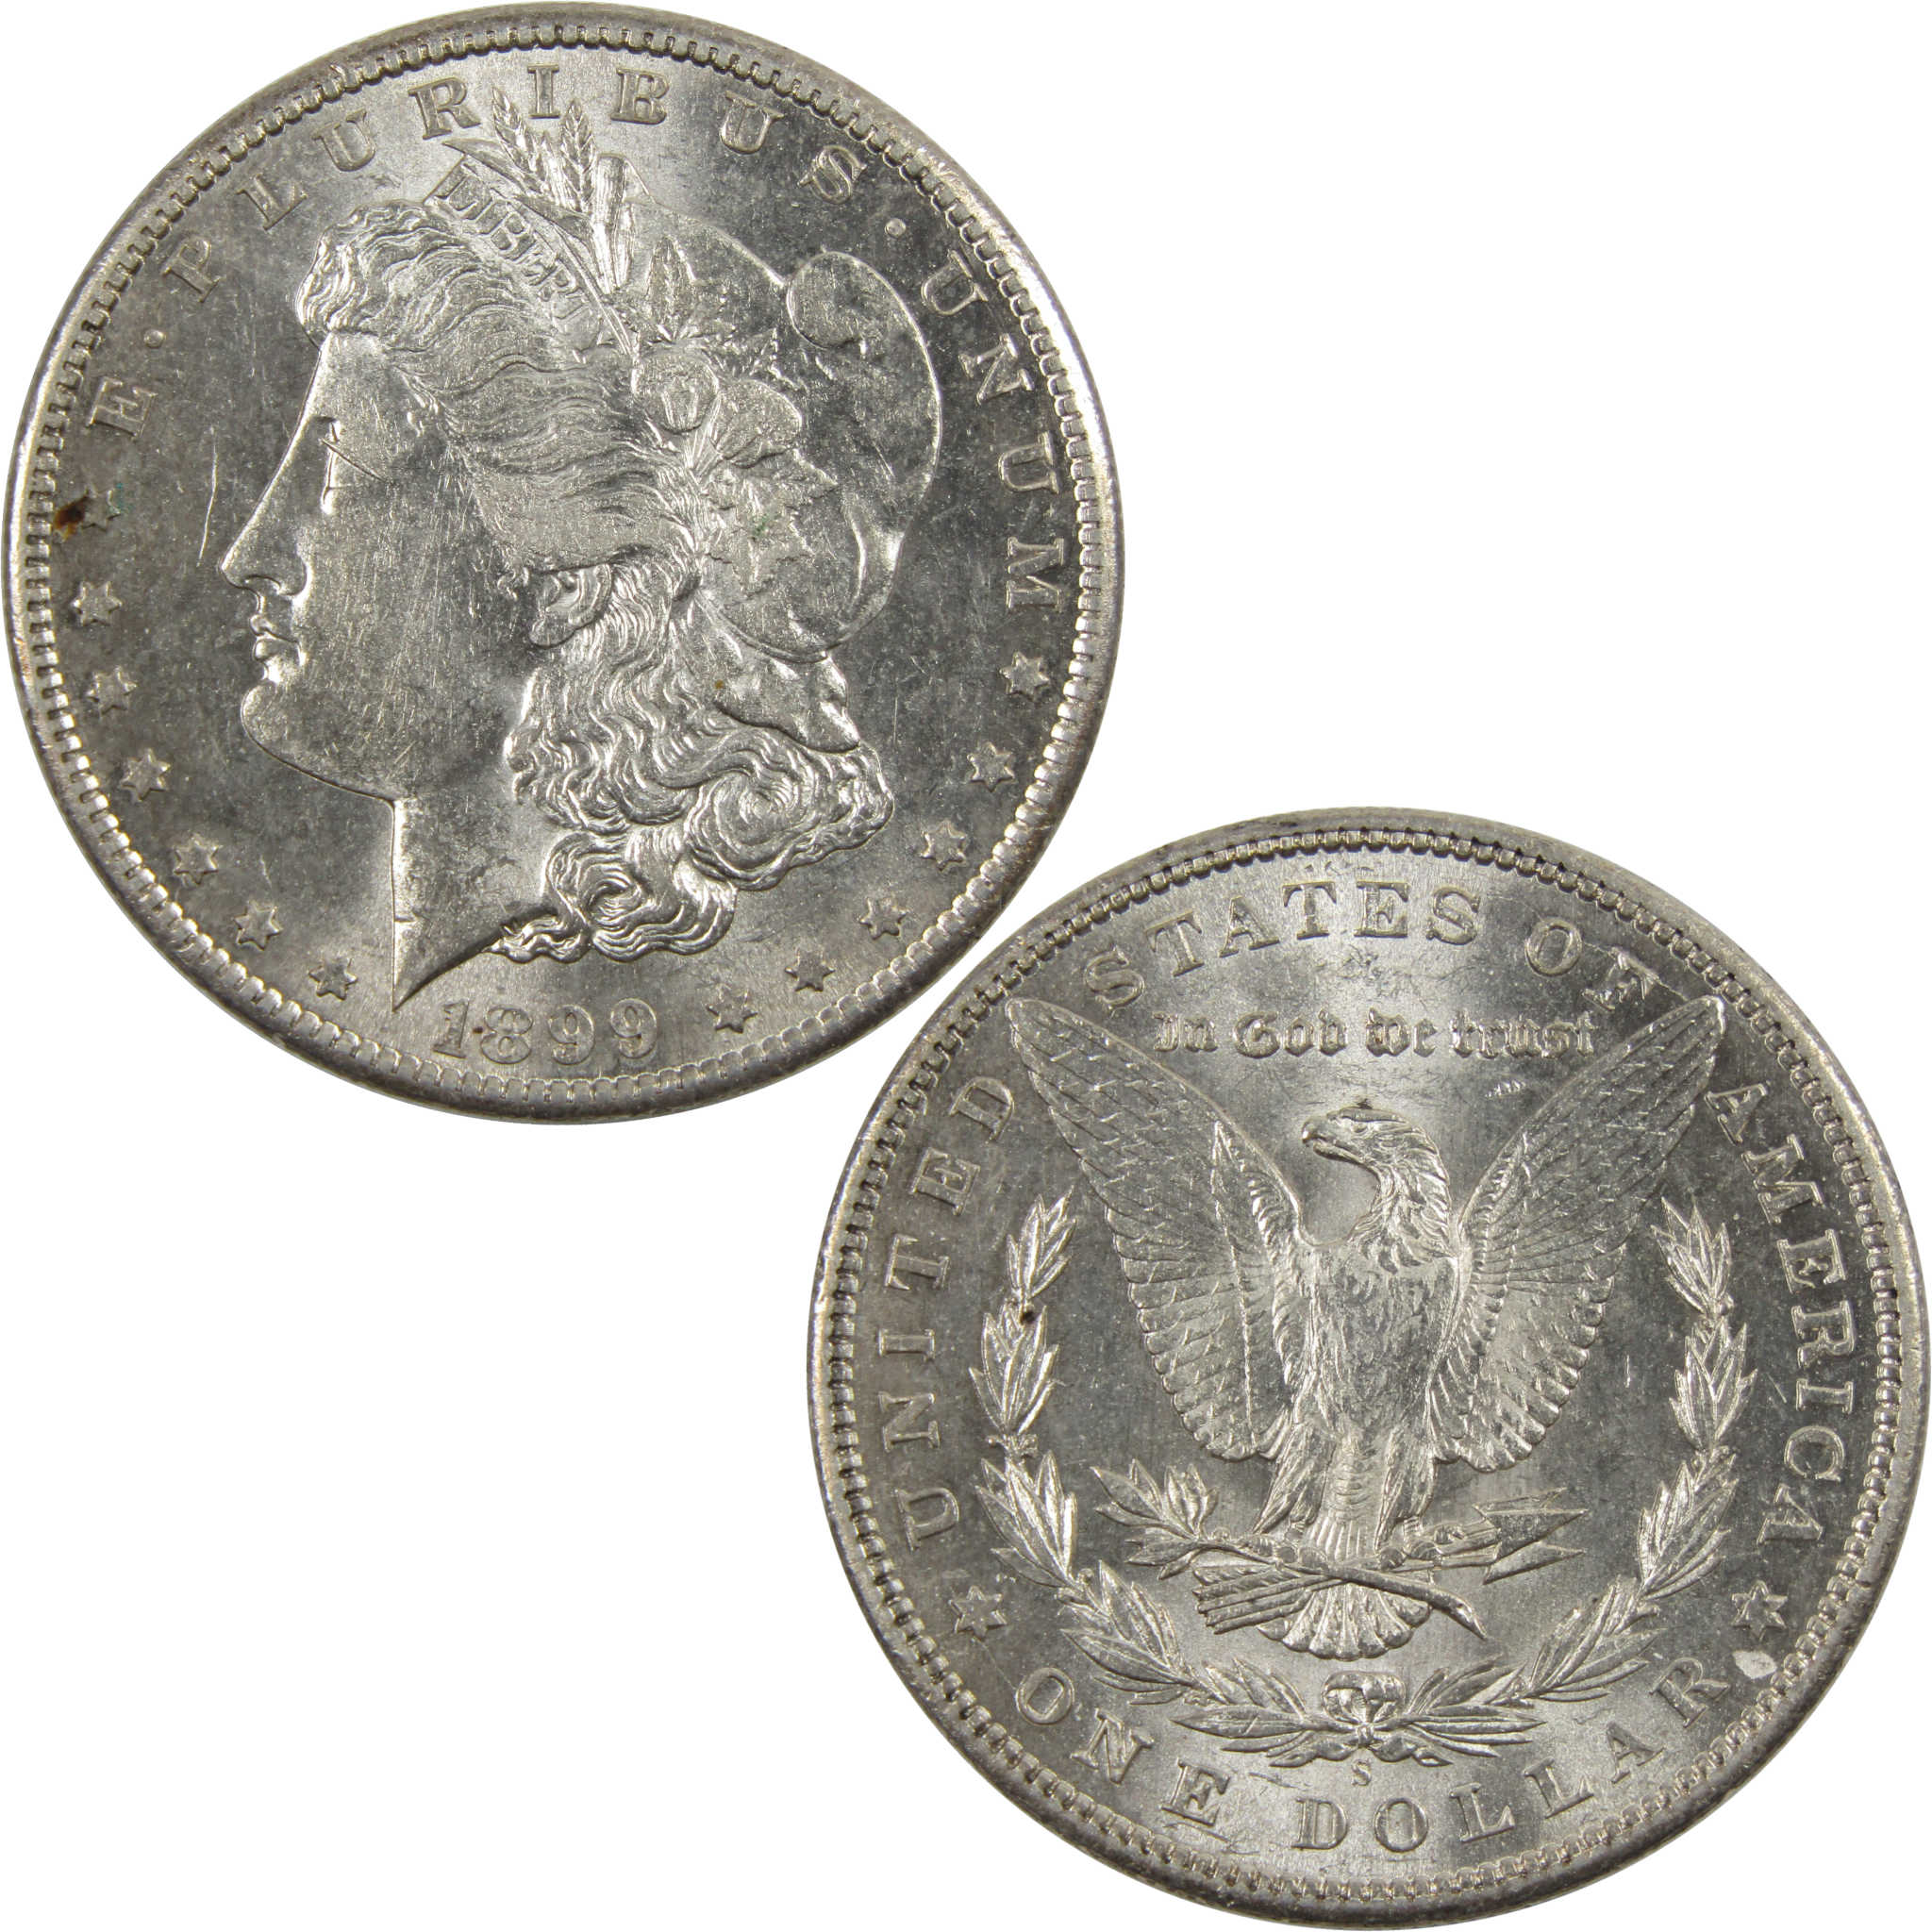 1899 S Morgan Dollar Borderline Uncirculated 90% Silver $1 SKU:I6073 - Morgan coin - Morgan silver dollar - Morgan silver dollar for sale - Profile Coins &amp; Collectibles